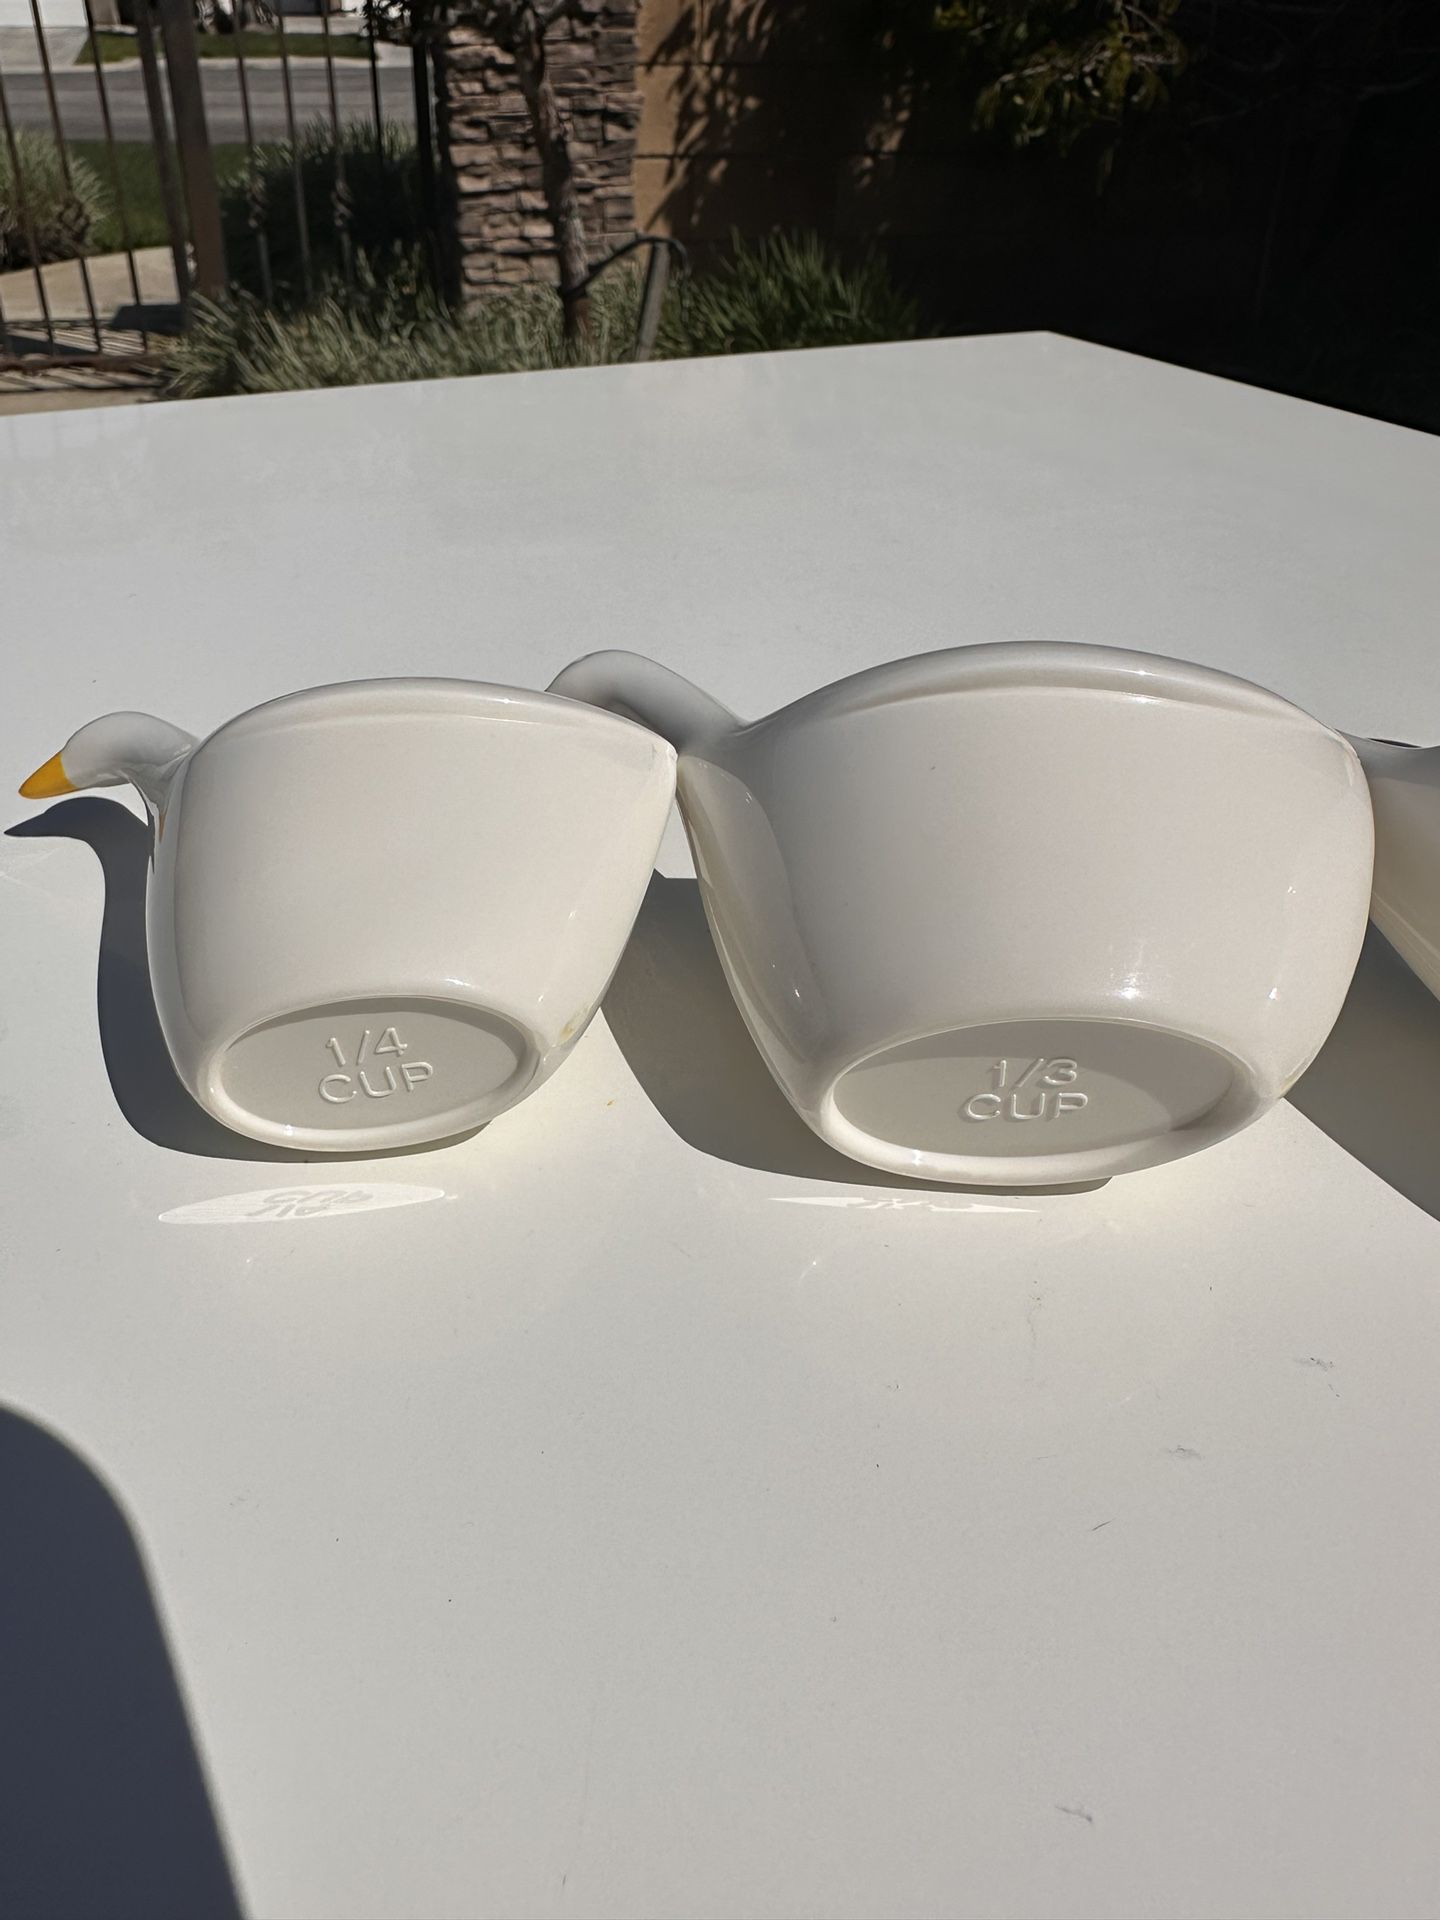 2 Vintage aluminum liquid measuring cups for Sale in San Diego, CA - OfferUp